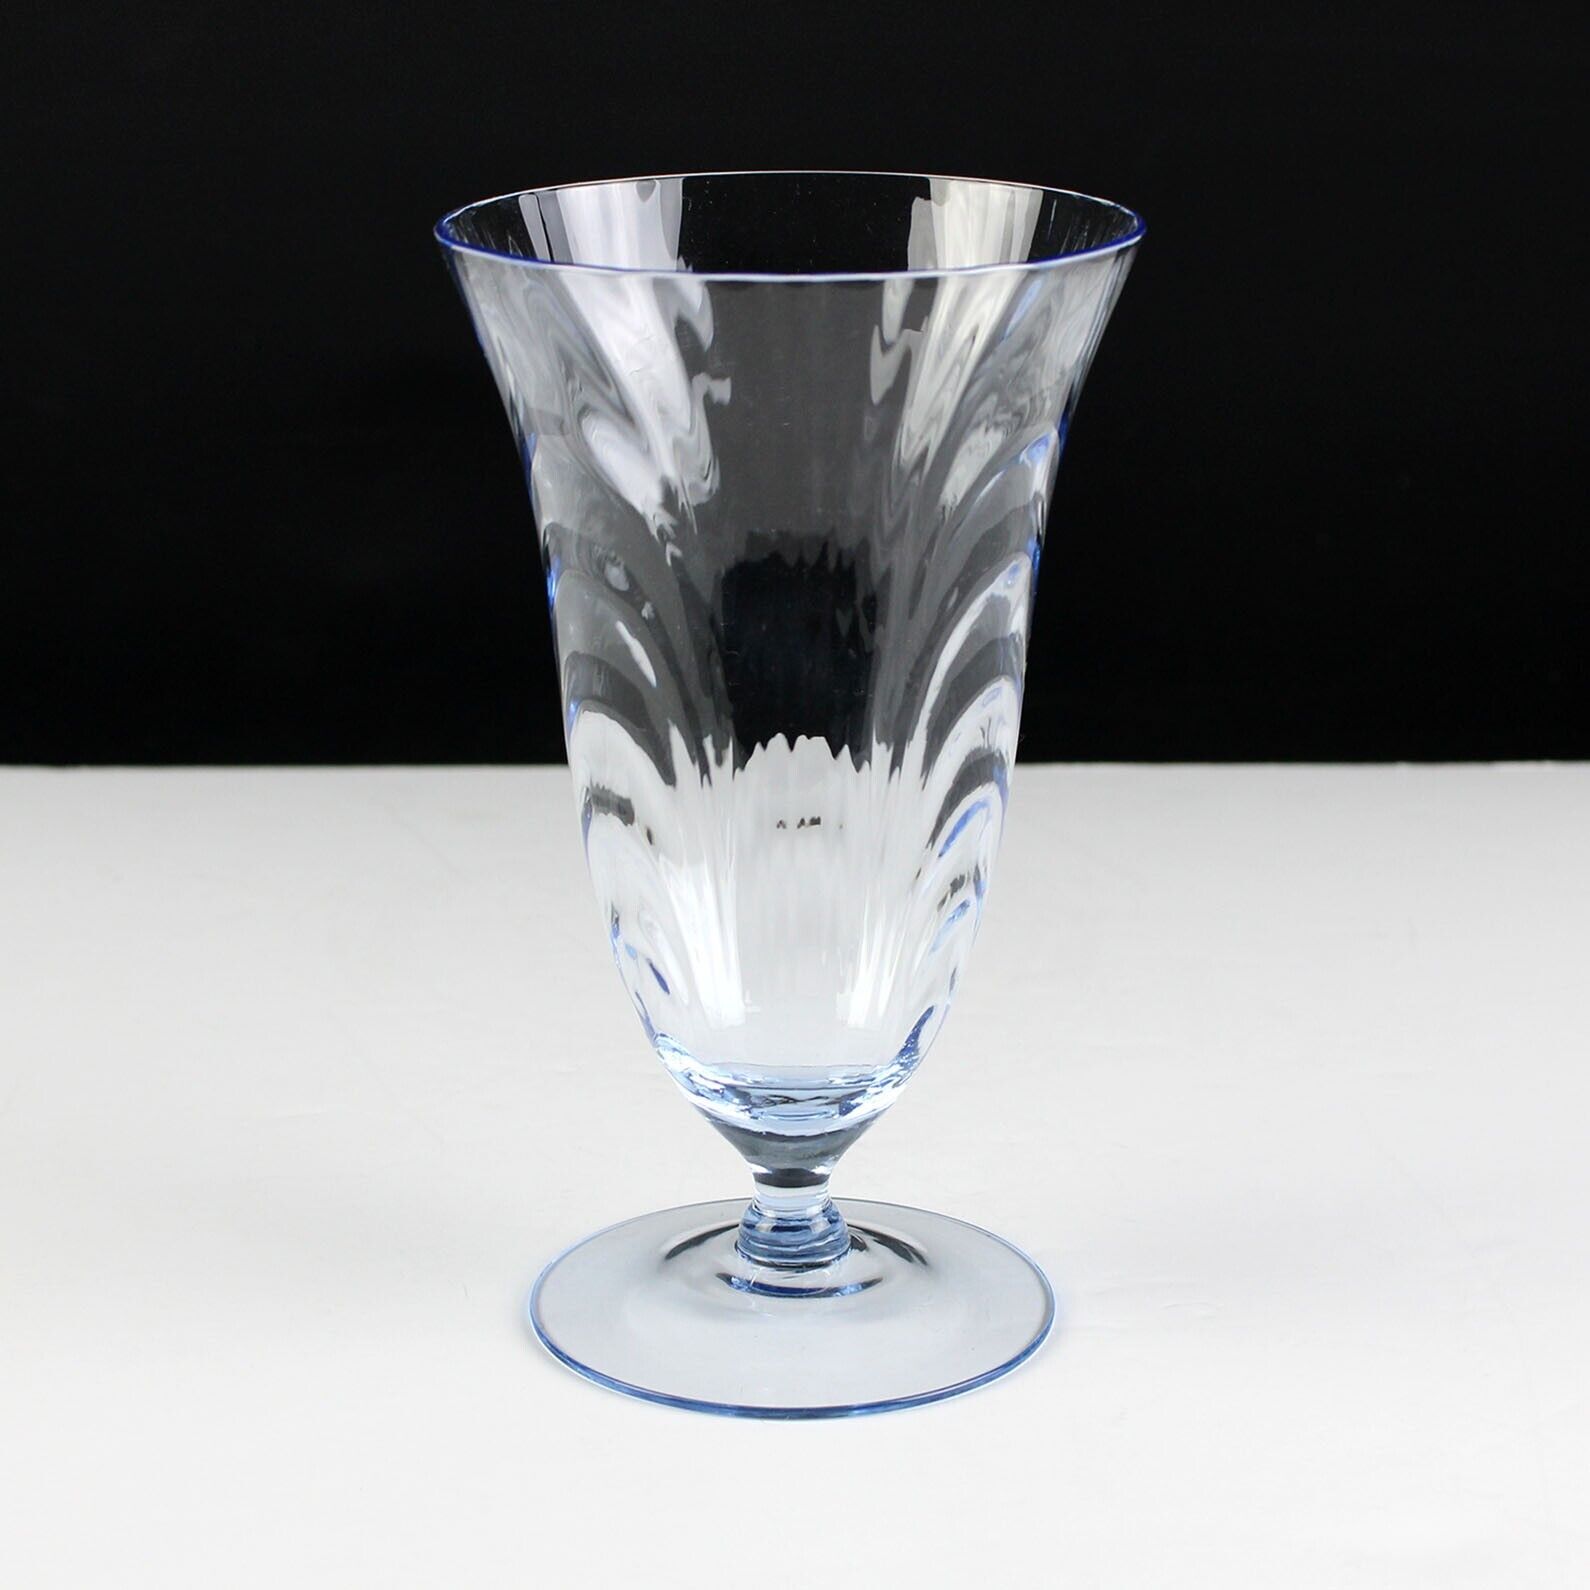 Primary image for Cambridge Caprice Blue 12oz Footed Tumbler Vintage Elegant Iced Tea Glass 6 1/8"